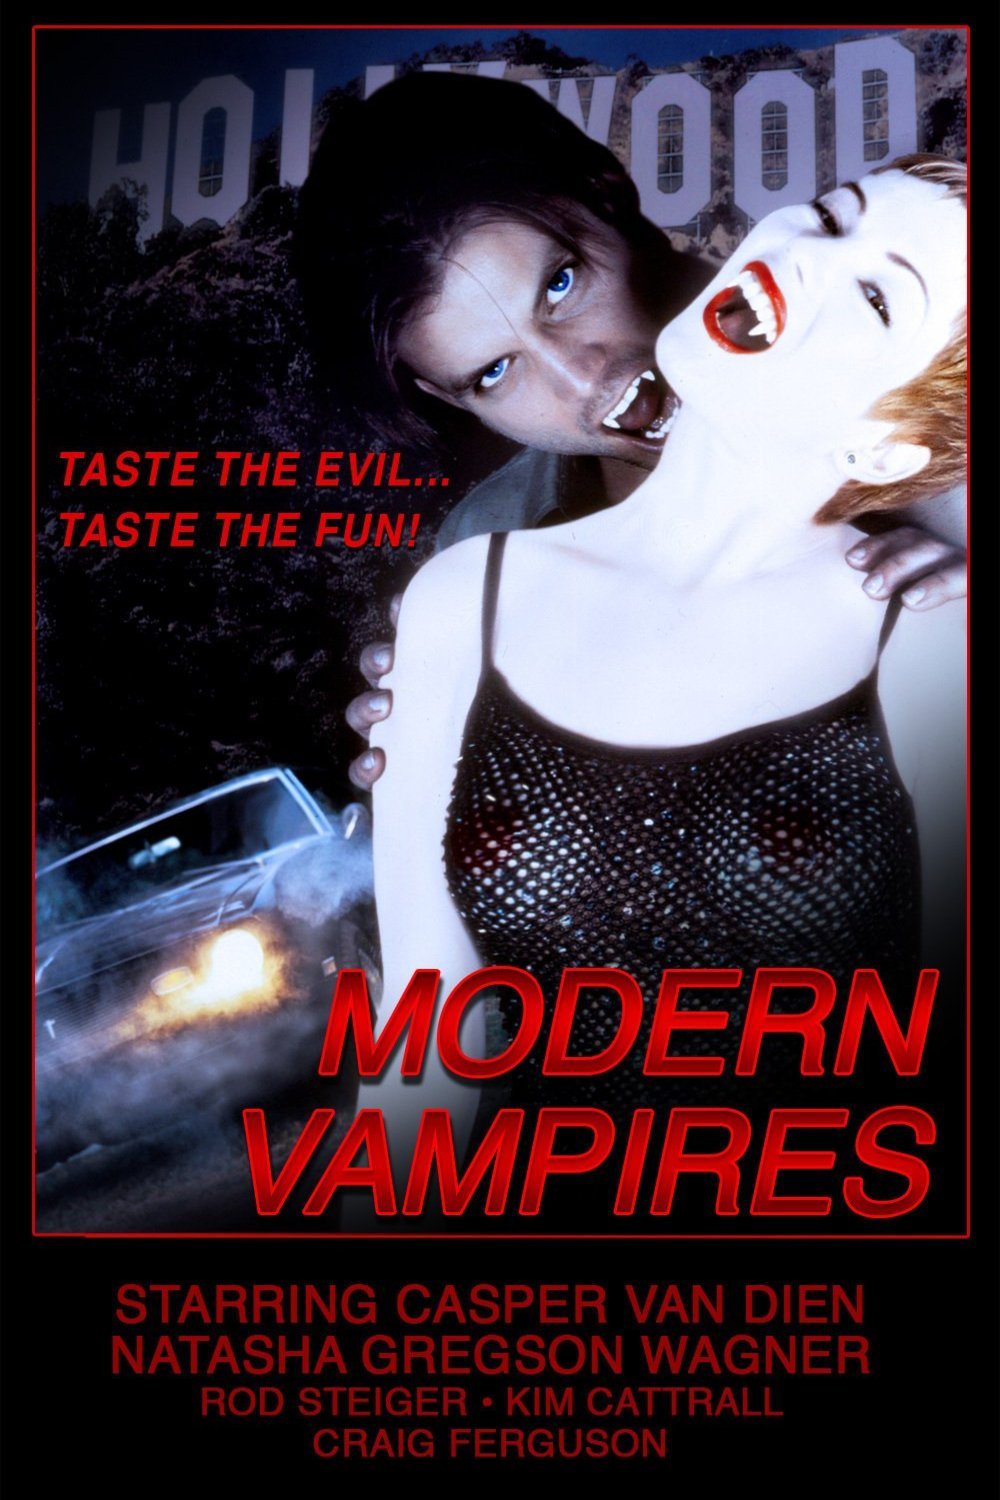 Poster of the movie Modern Vampires